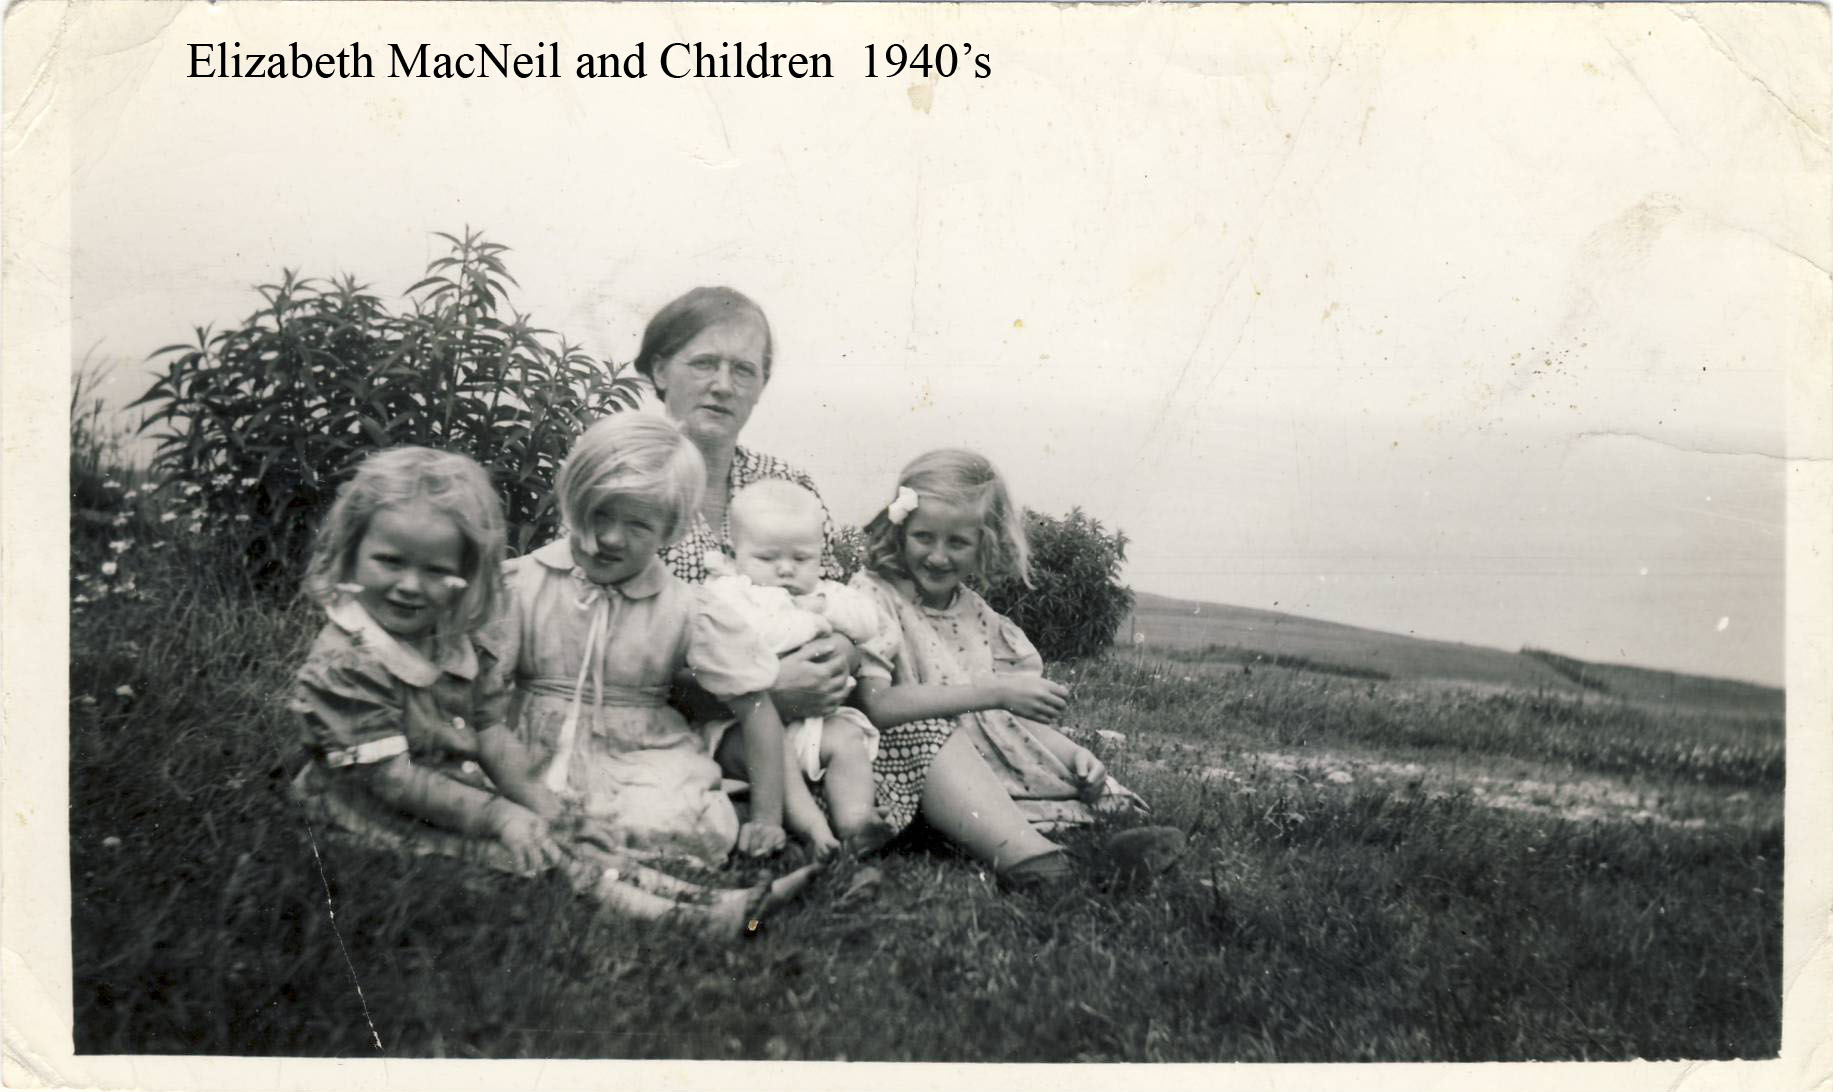 Elizabeth MacNeil and Family 1940s